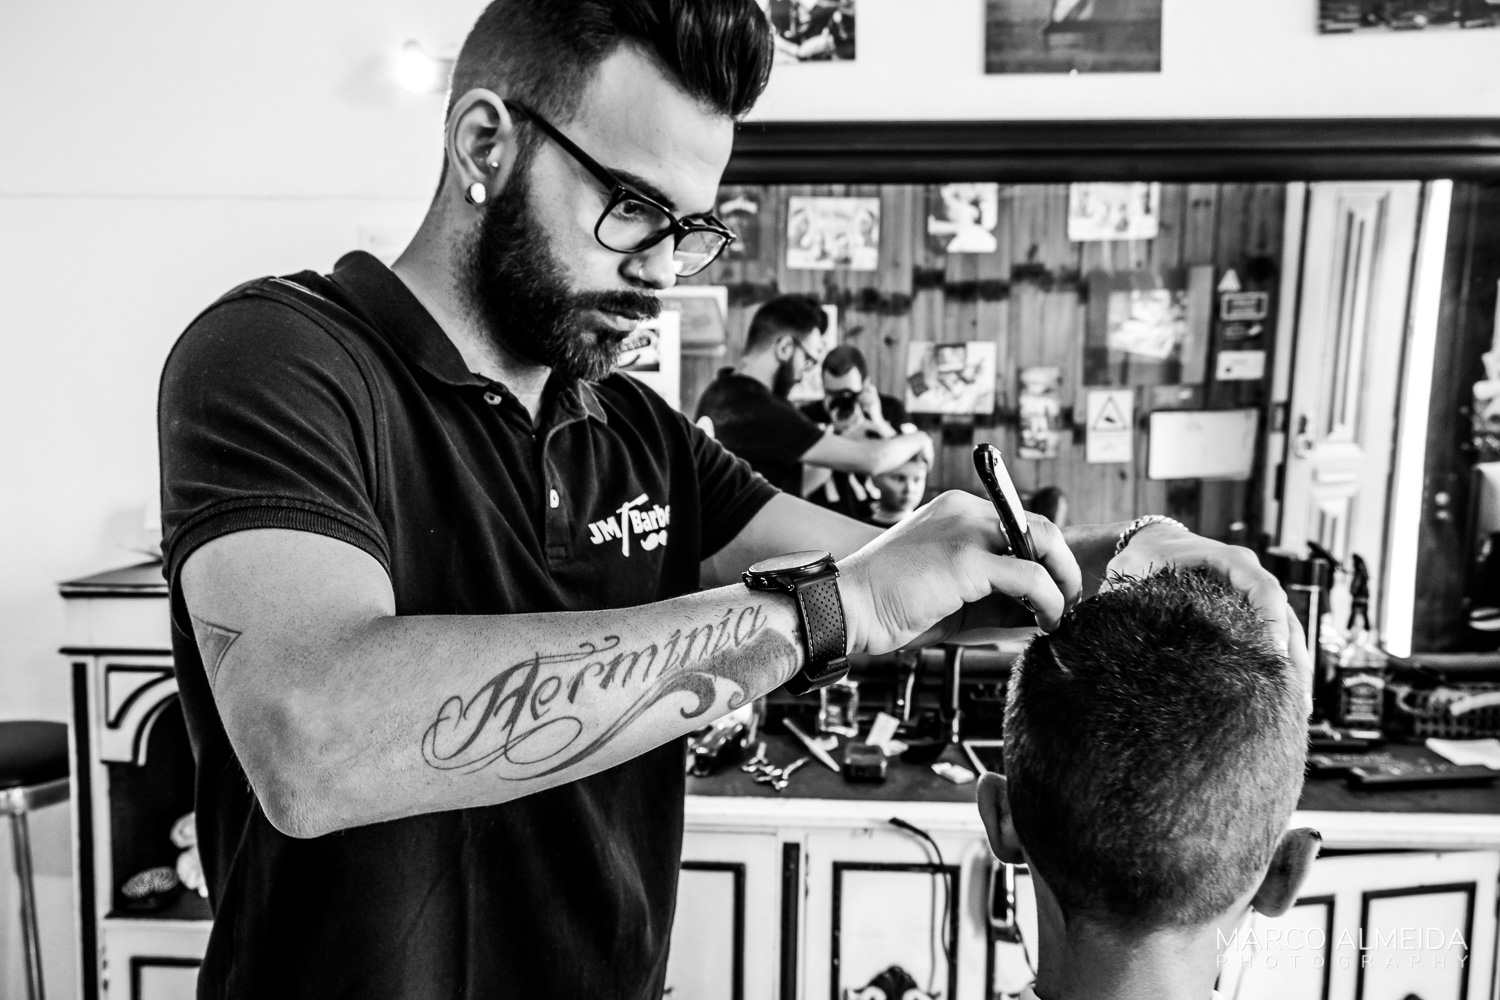 Luís at Barbershop O Pexito, Sesimbra - People - Marco Almeida Photography